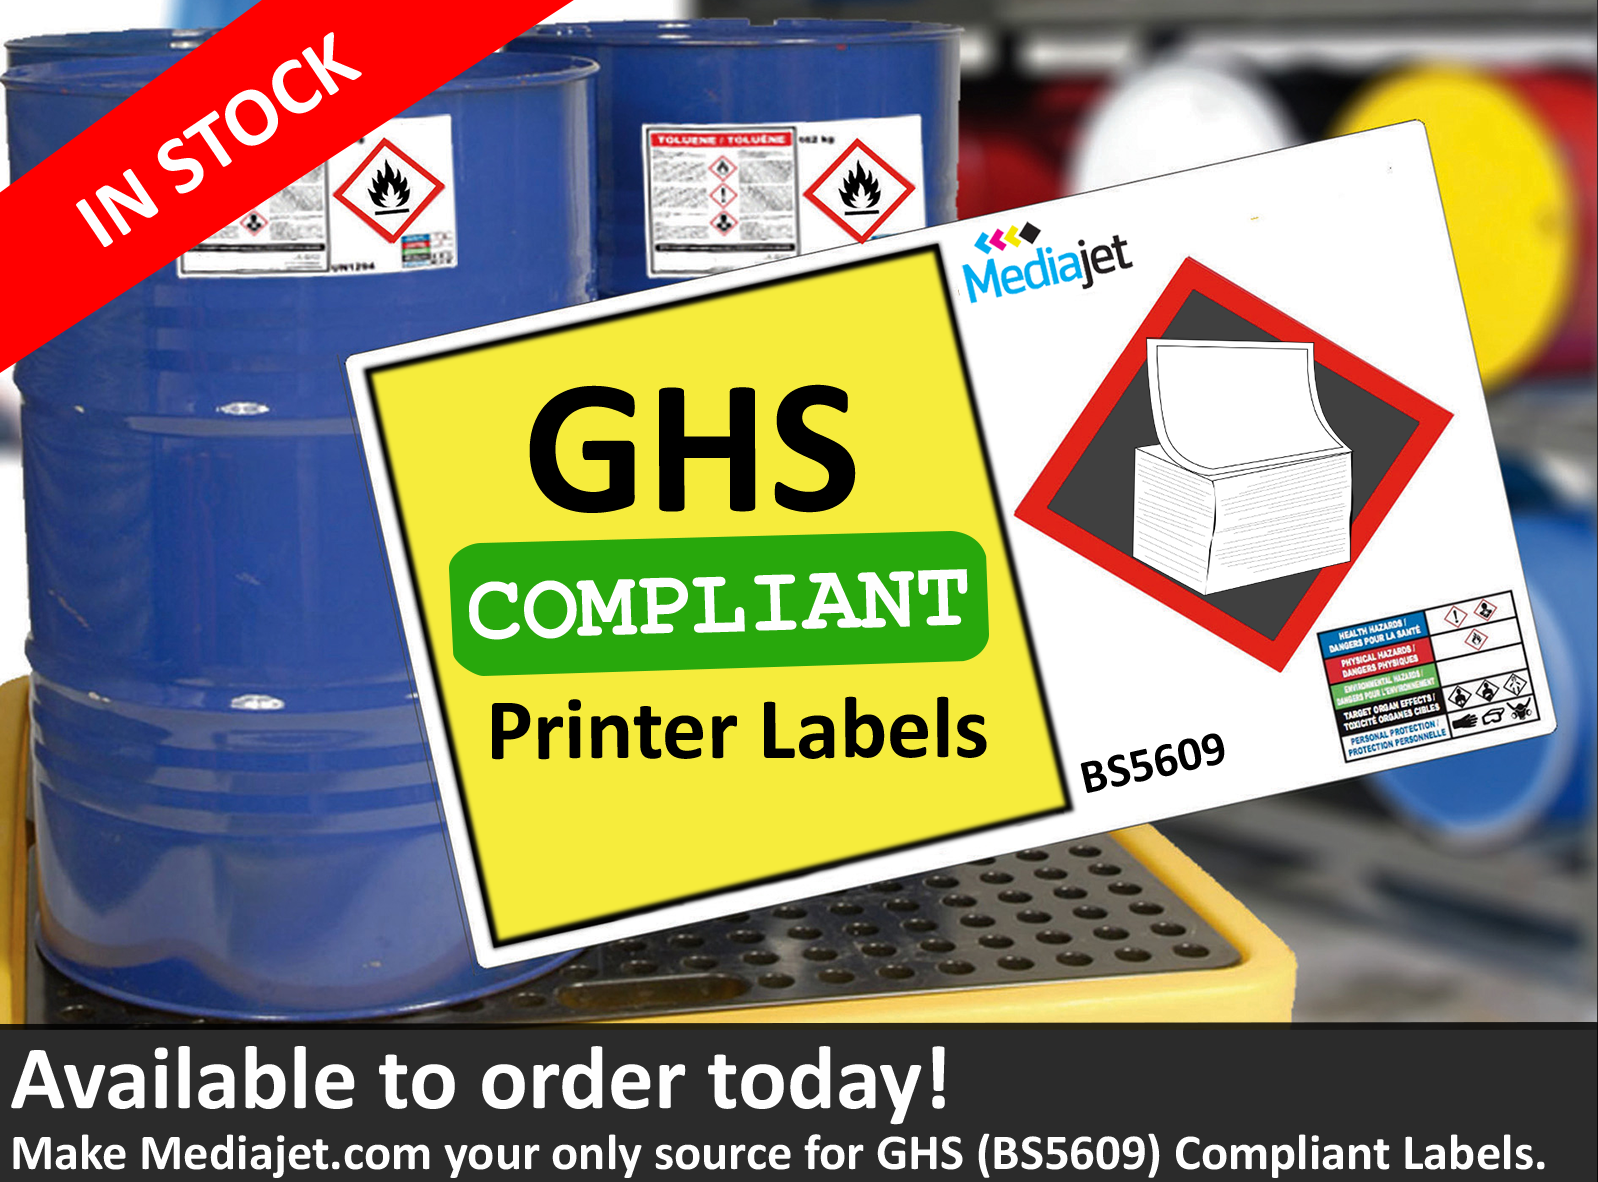 Compliant Printer Labels